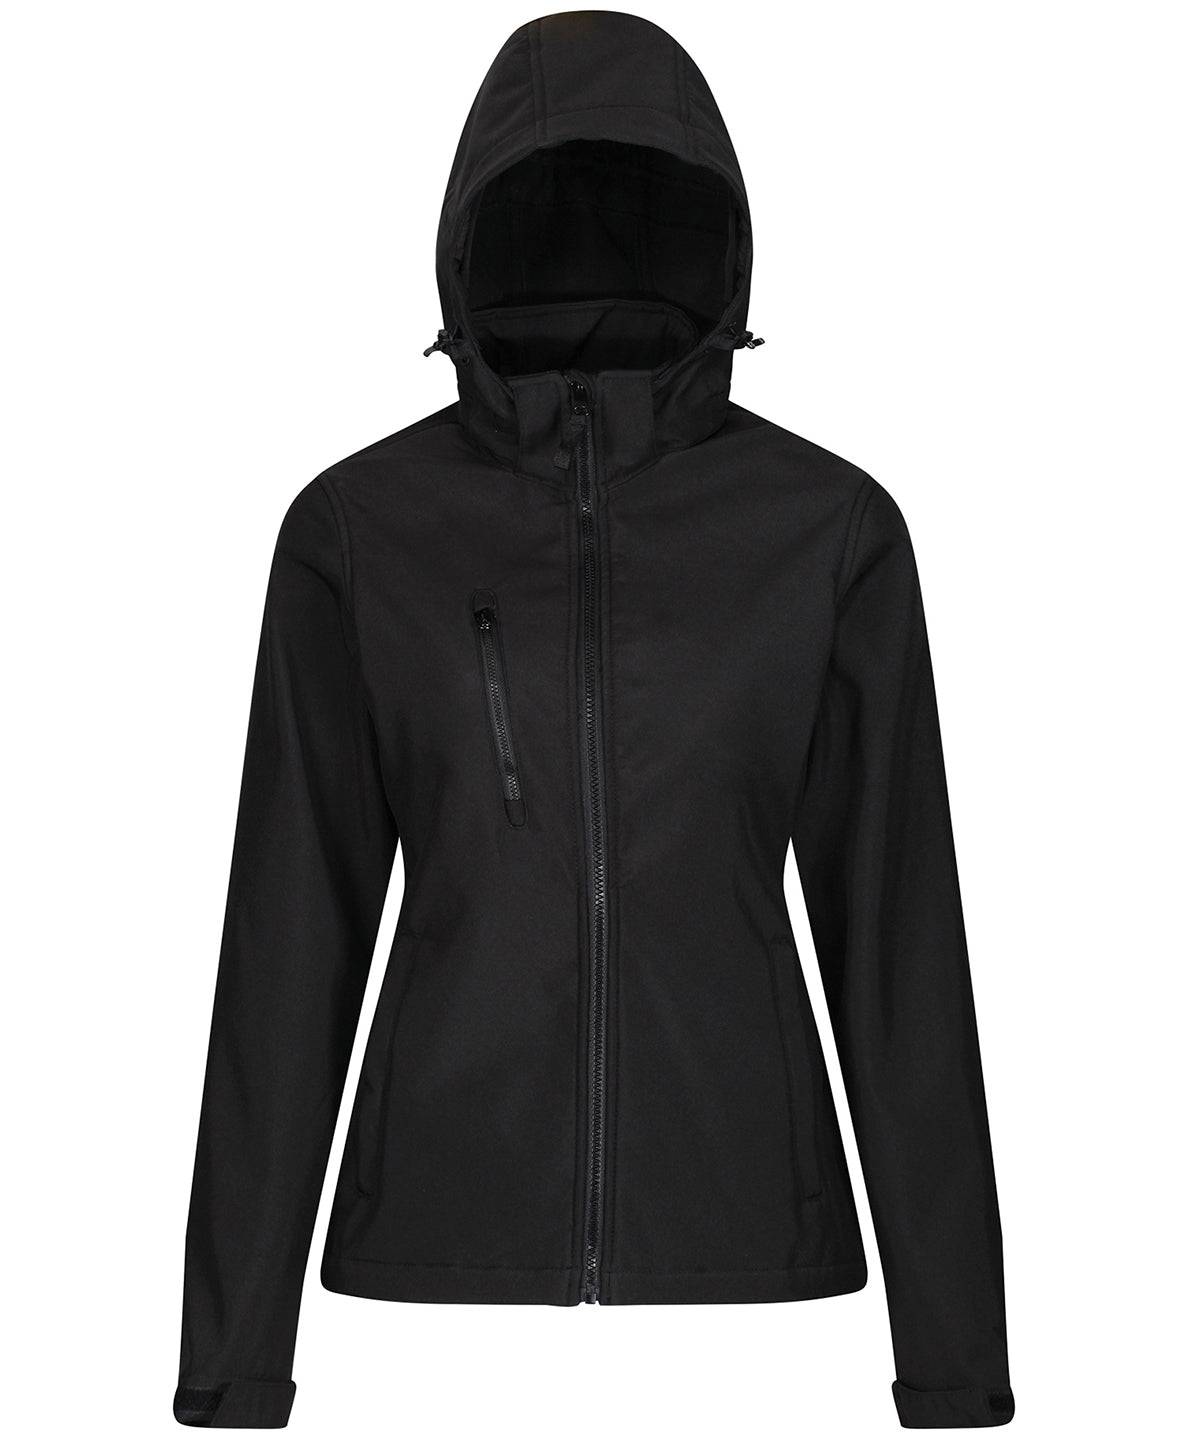 Black - Women's venturer 3-layer hooded softshell jacket